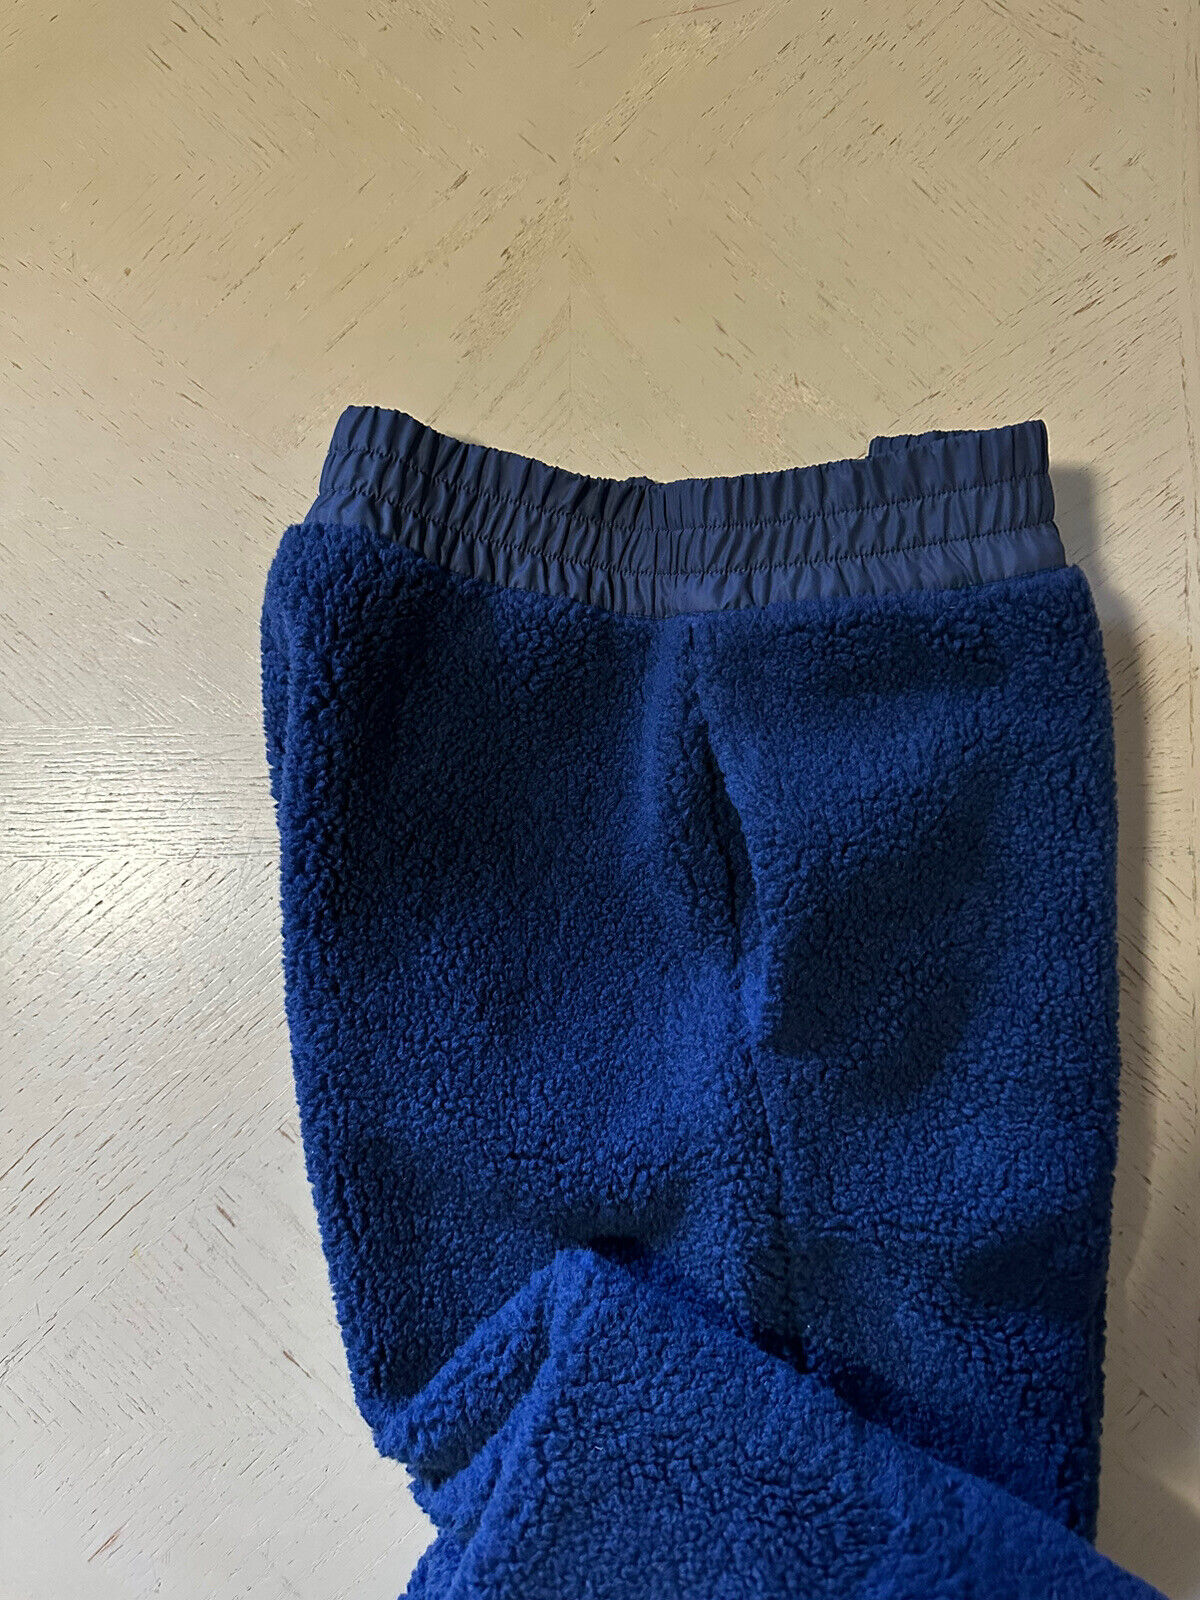 Neue 1450 $ Fendi Herren Pantalone Woll-Teddyhose, Blau, 32 US/48 Eu, Irland